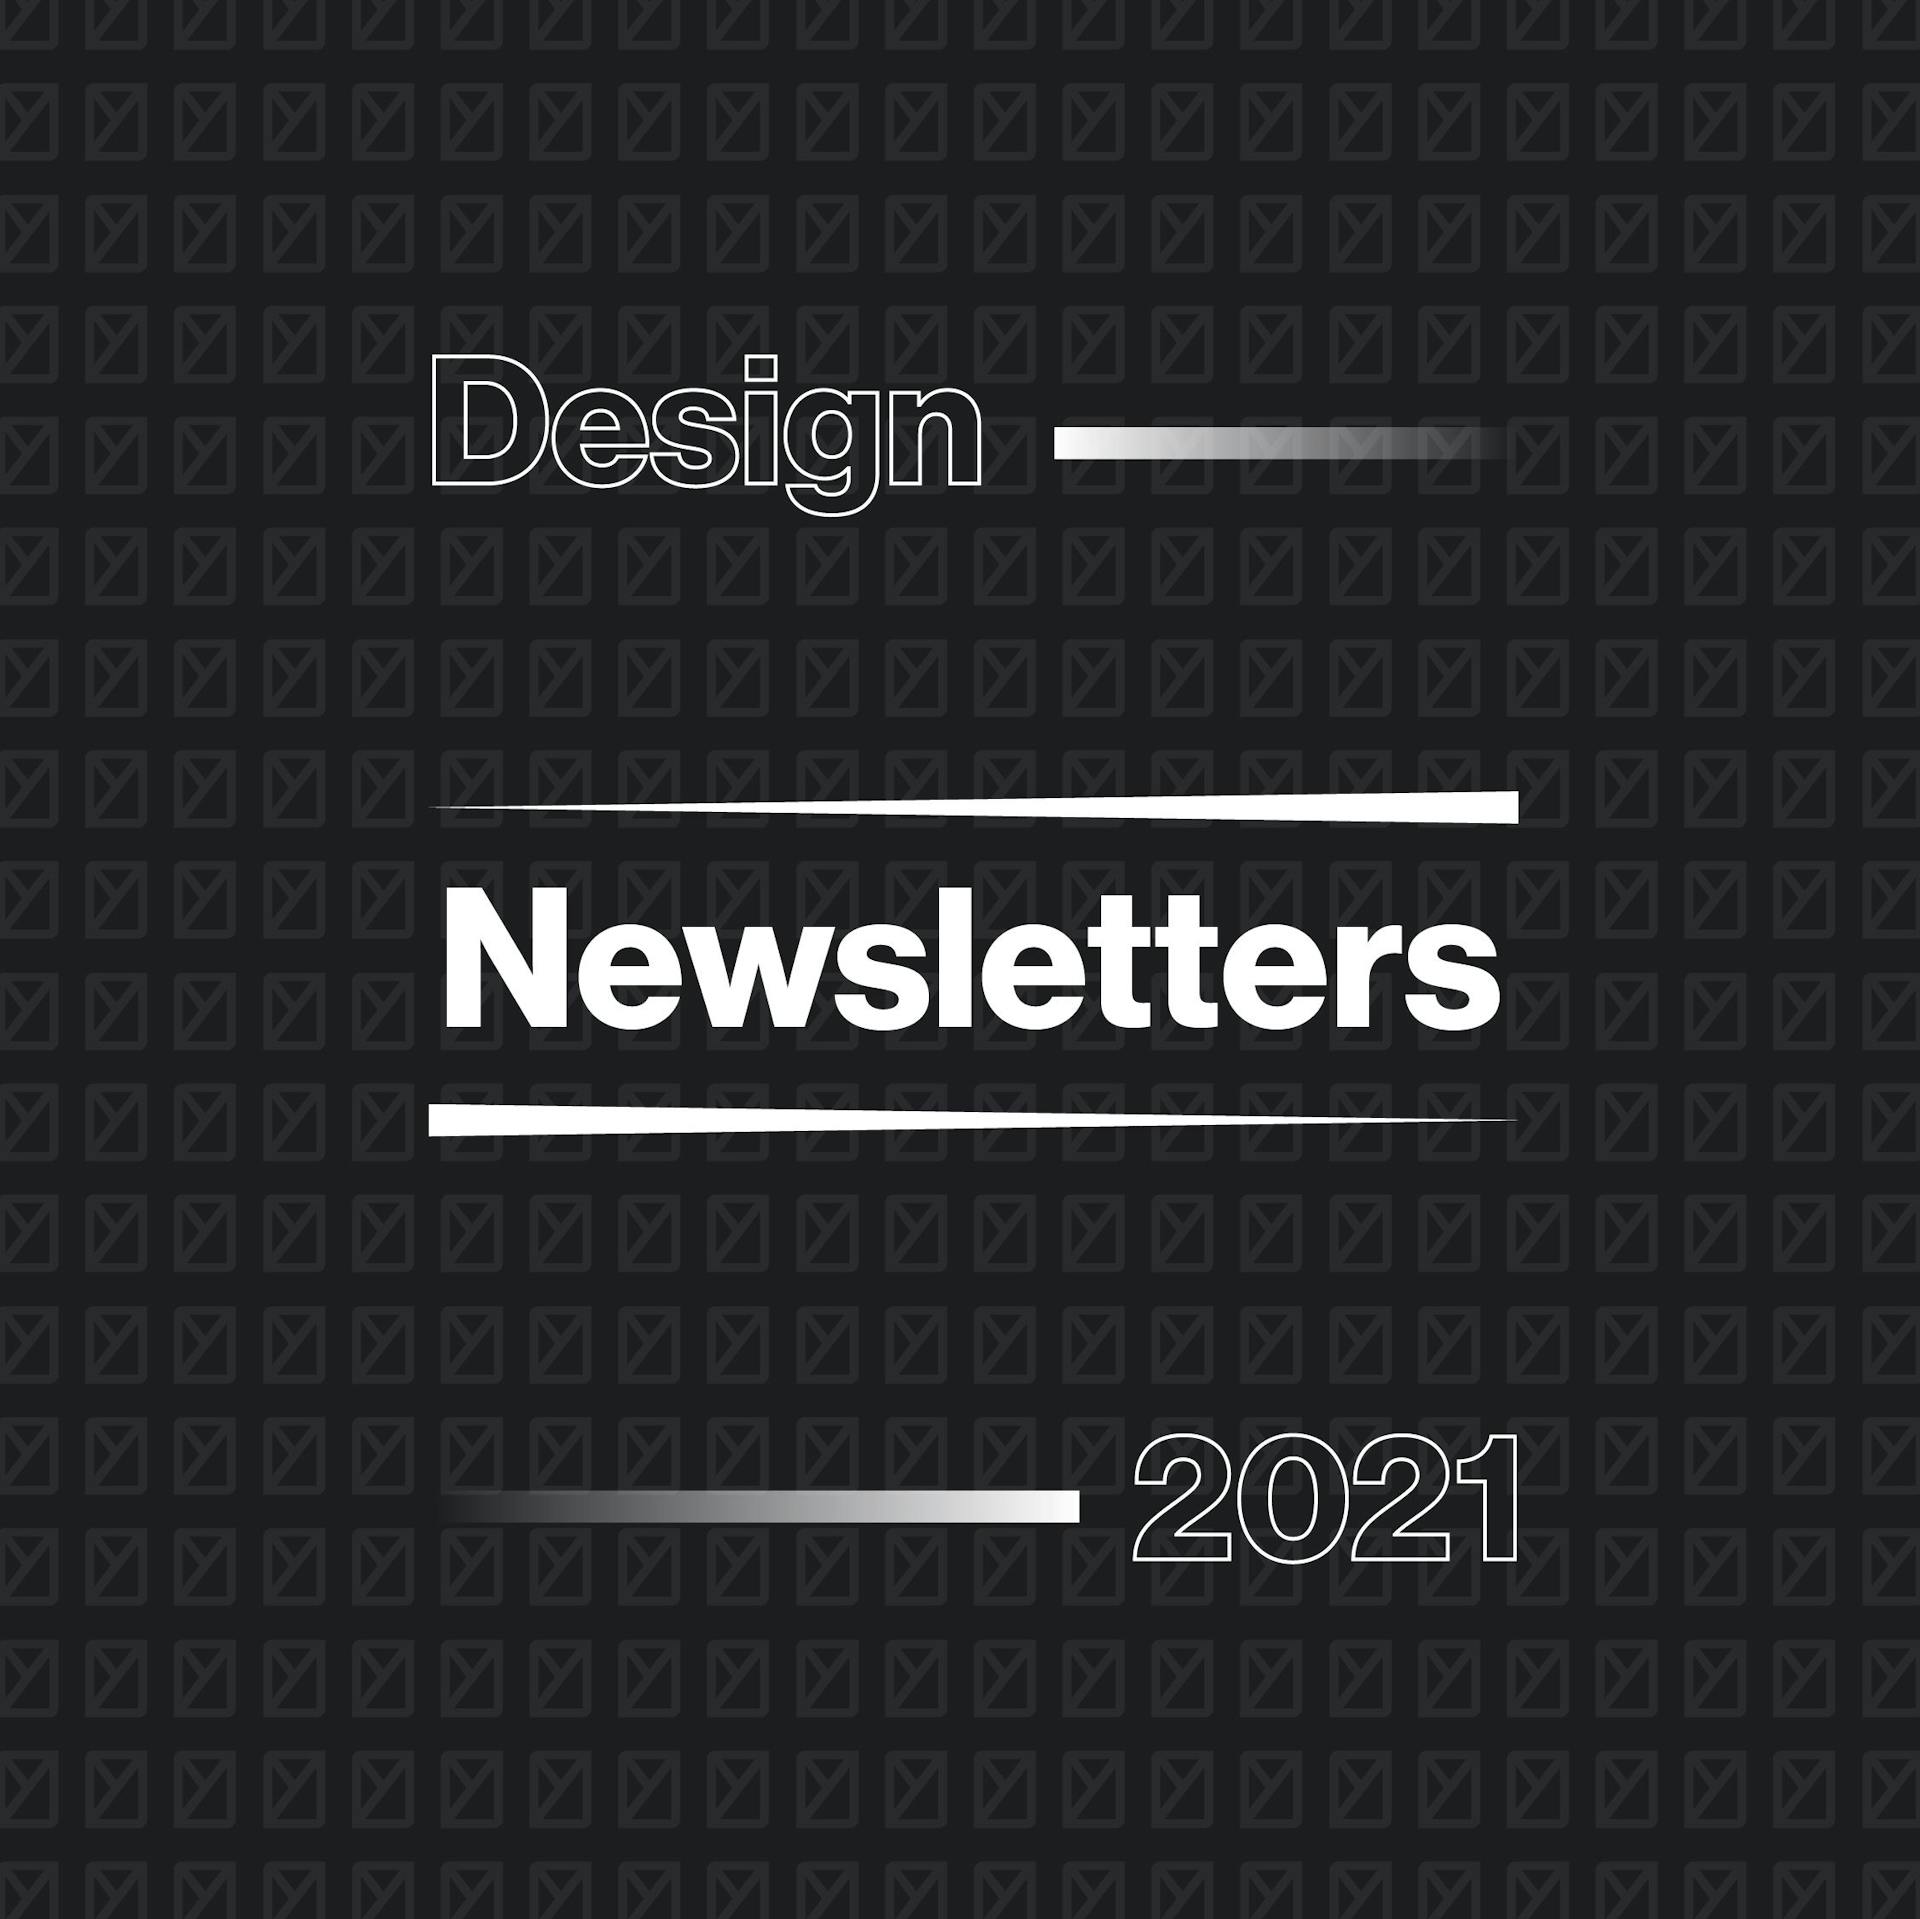 Newsletter Design - Email Direct Marketing in 2021